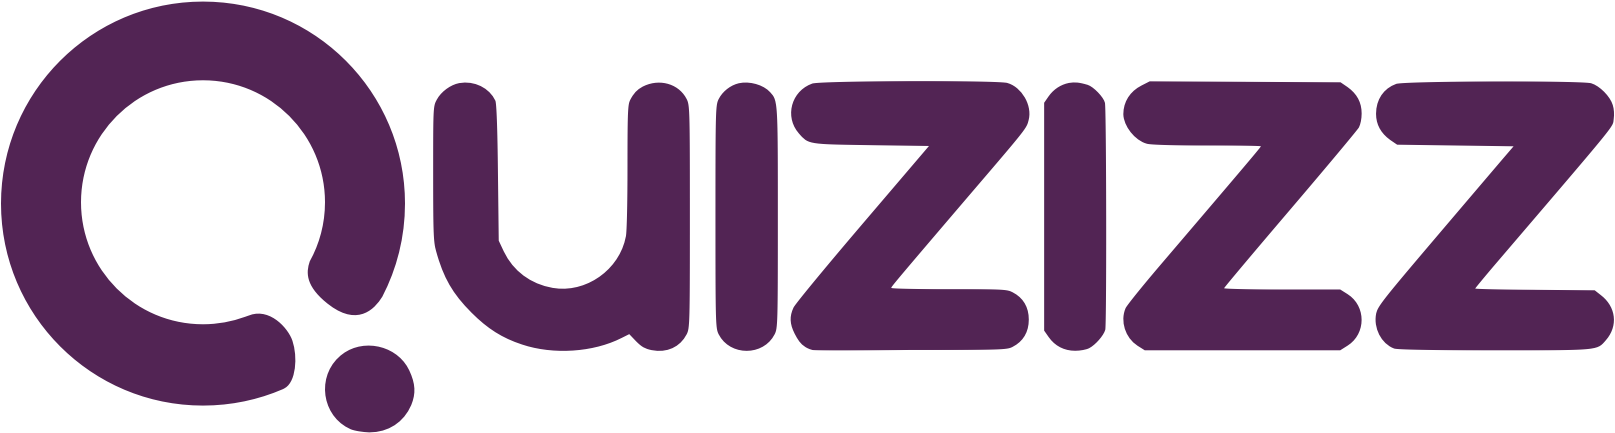 Квизизз. Quizizz. Quizizz.com. Quizziz логотип. Платформа Quizizz.